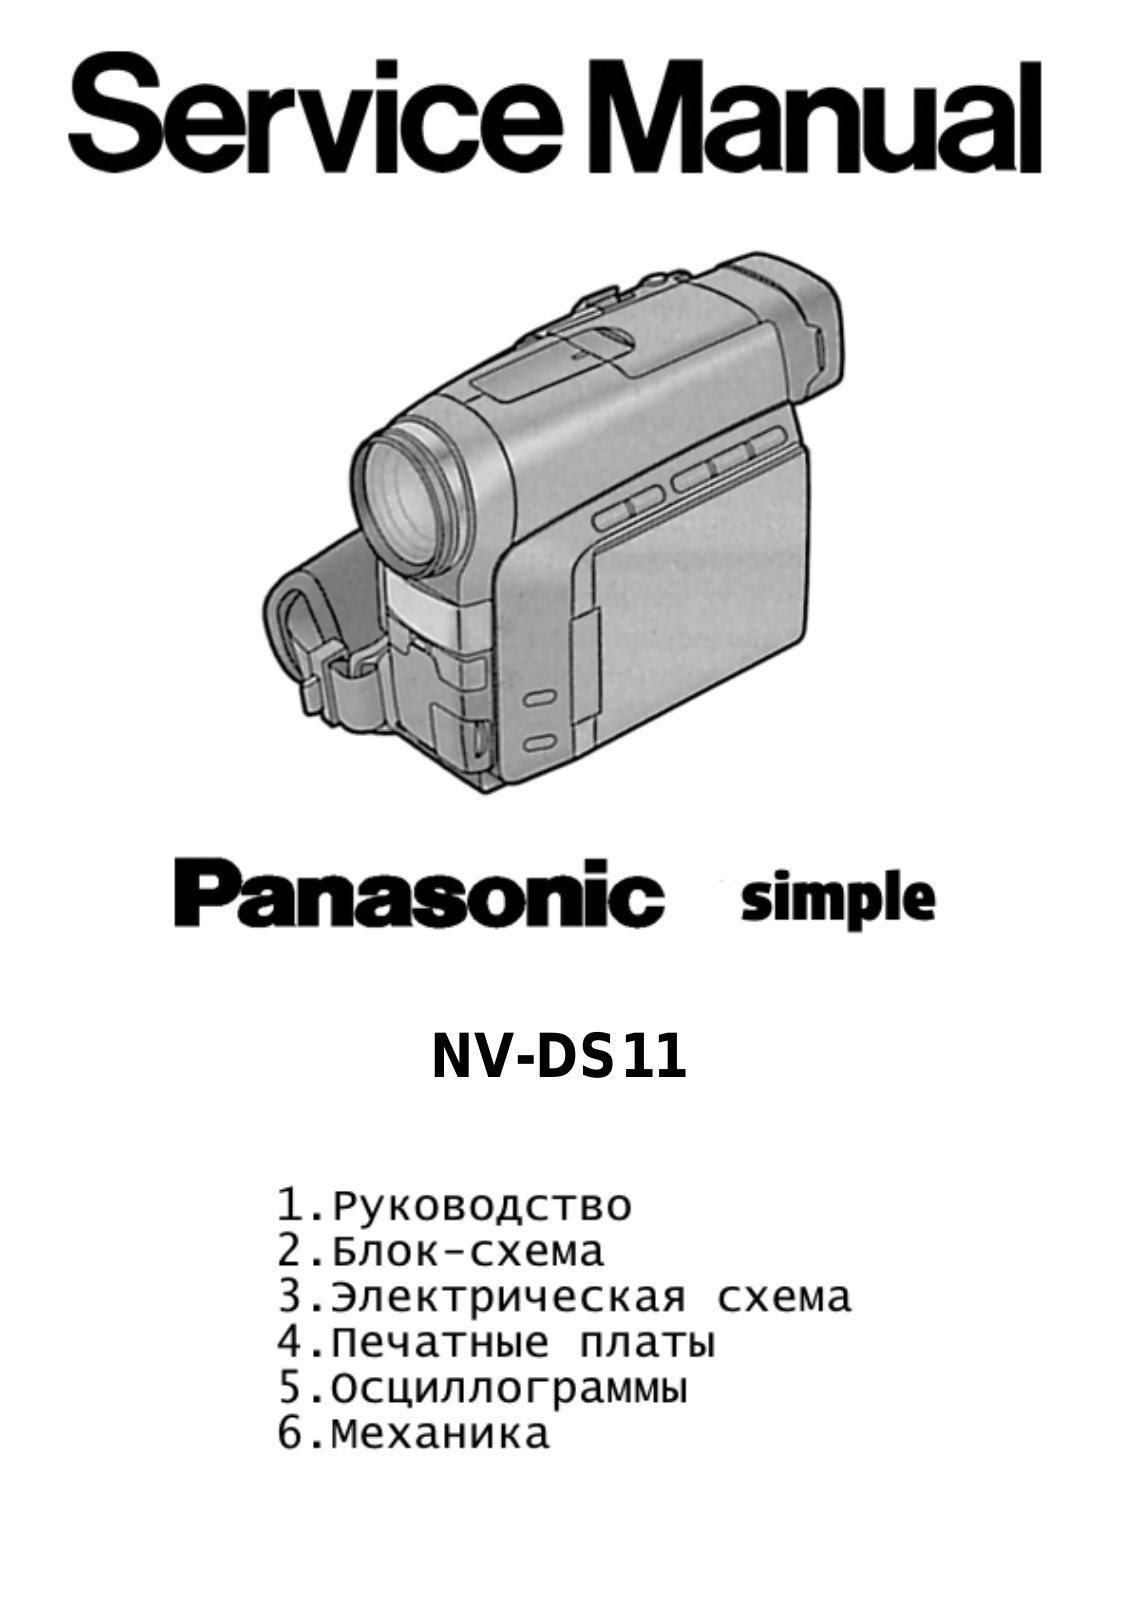 Panasonic NV-DS11 SERVICE MANUAL